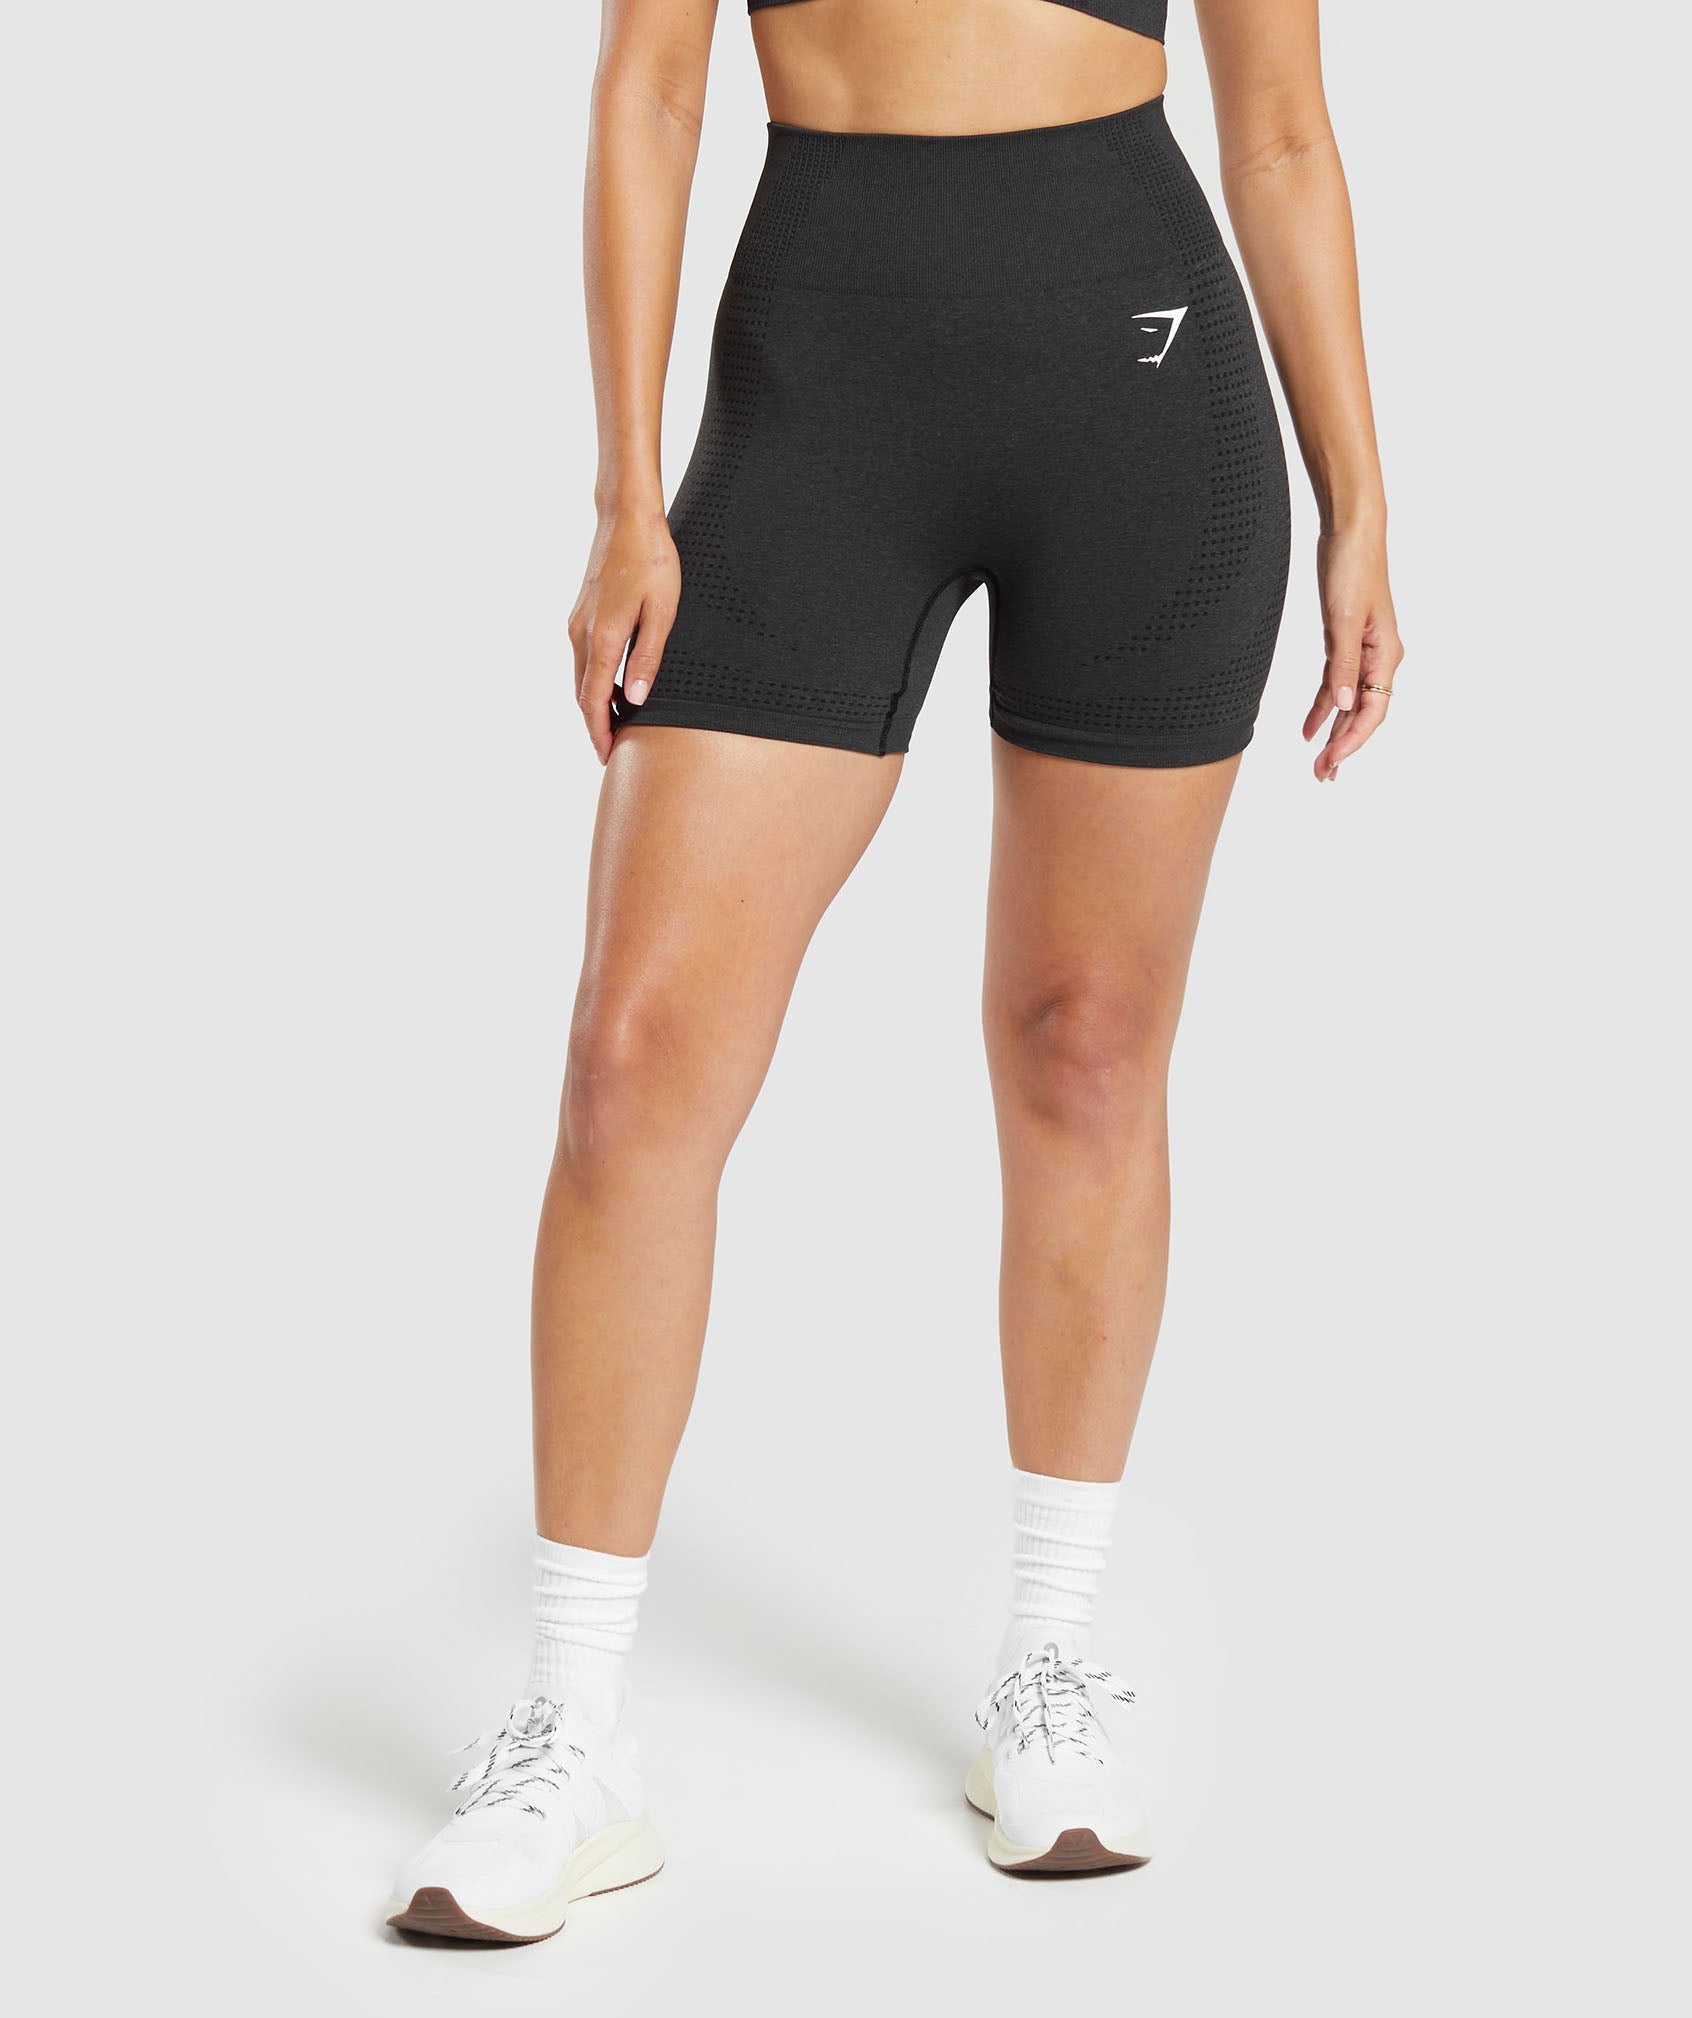 Women Gym Shorts 2-in-1 Anti-Chafing - Black